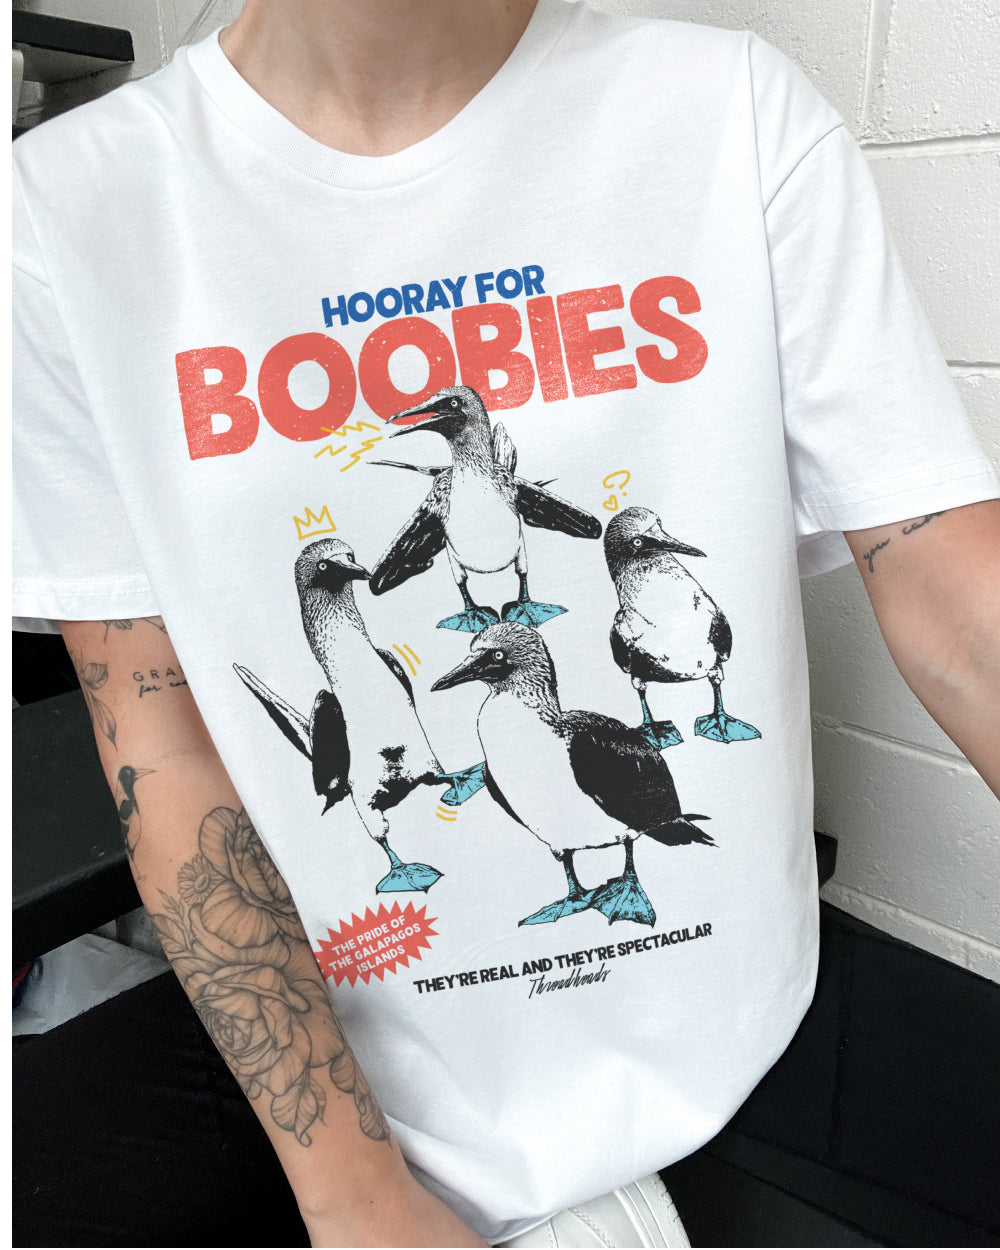 Hooray for Boobies T-Shirt, Funny Graphic T-Shirt